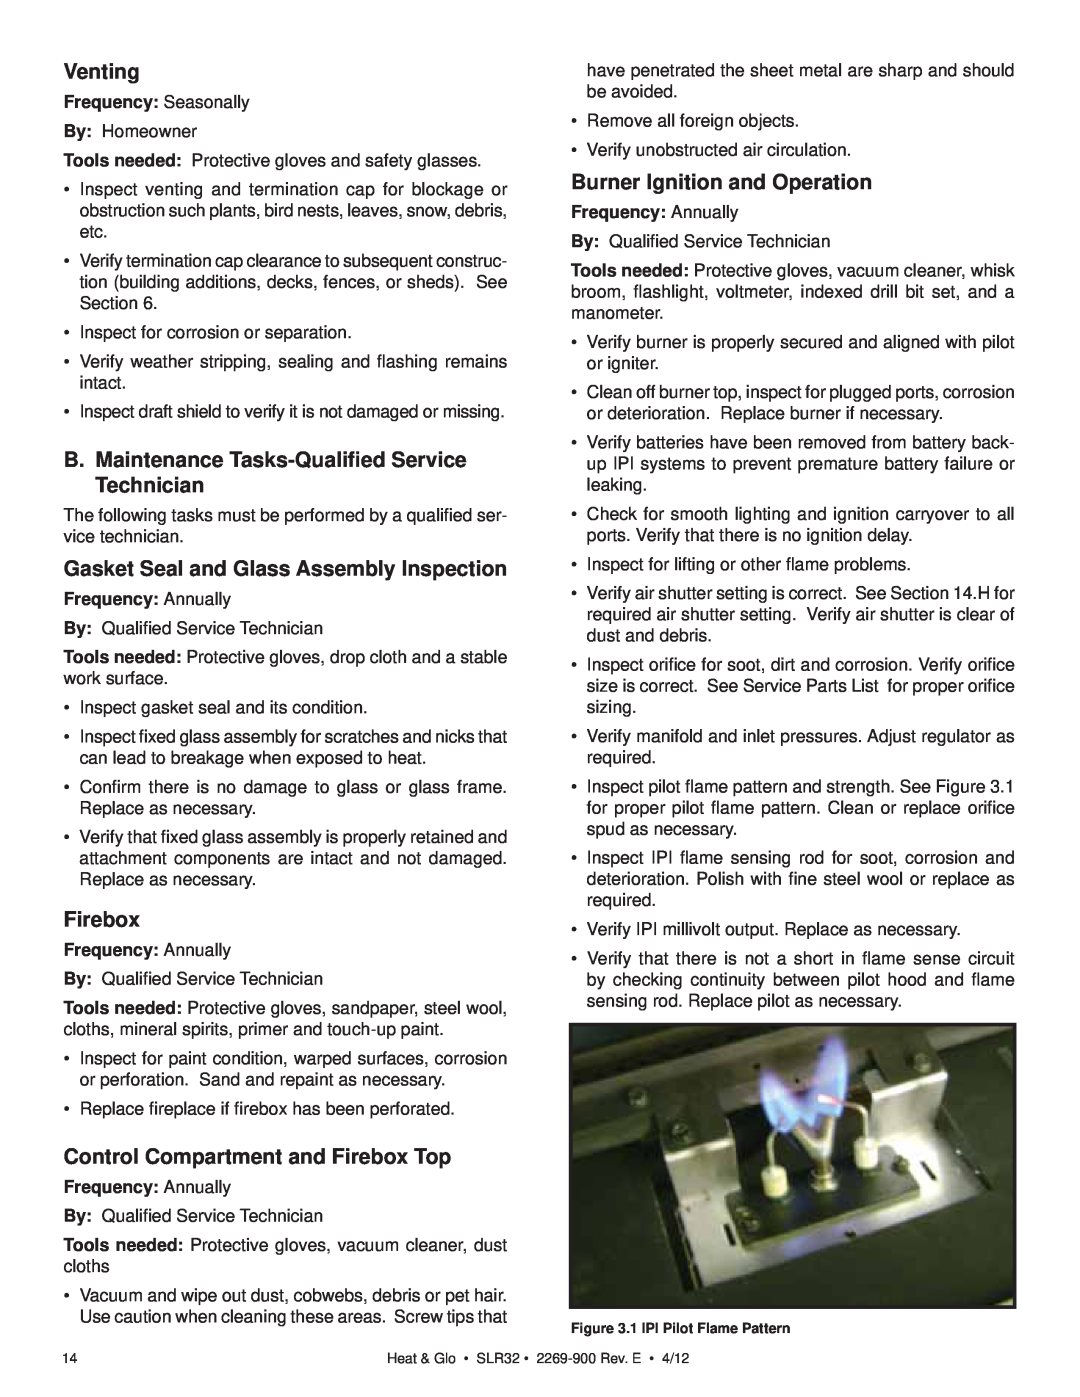 Heat & Glo LifeStyle SLR32 Venting, B.Maintenance Tasks-QualiﬁedService Technician, Firebox, Burner Ignition and Operation 